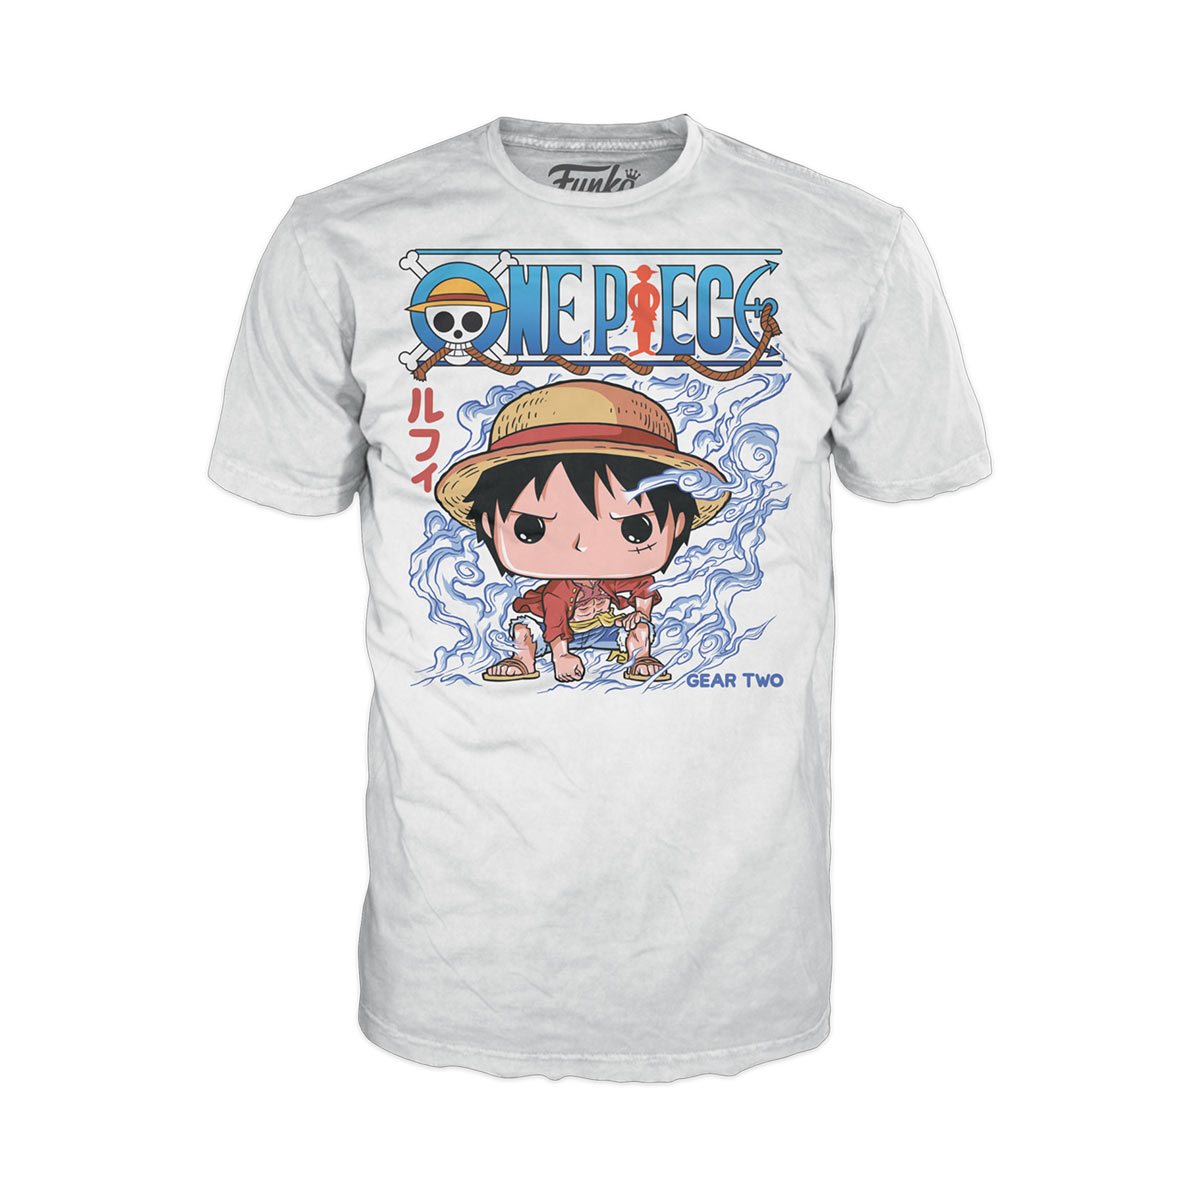 Shop One Piece Action Figures, Shirts, Pops & More